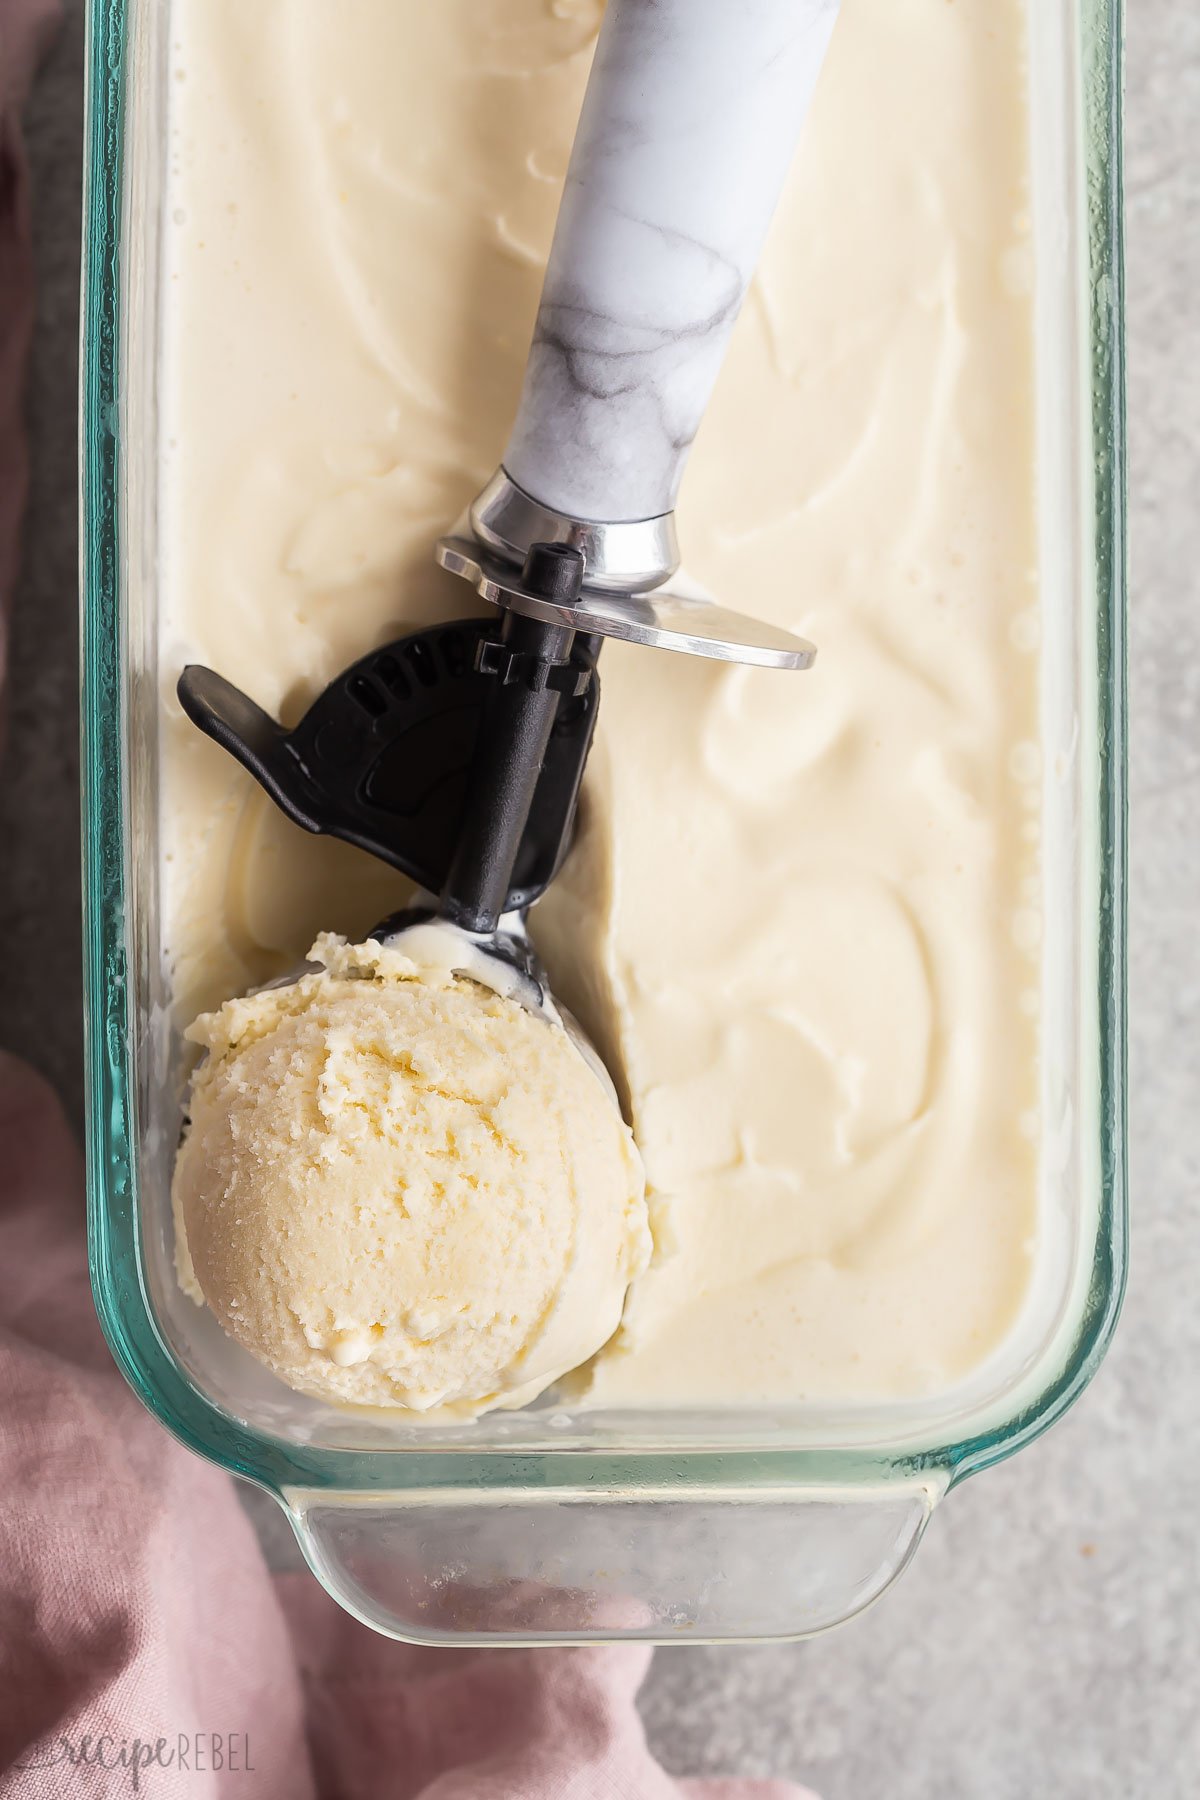 single scoop of ice cream in ice cream scoop.